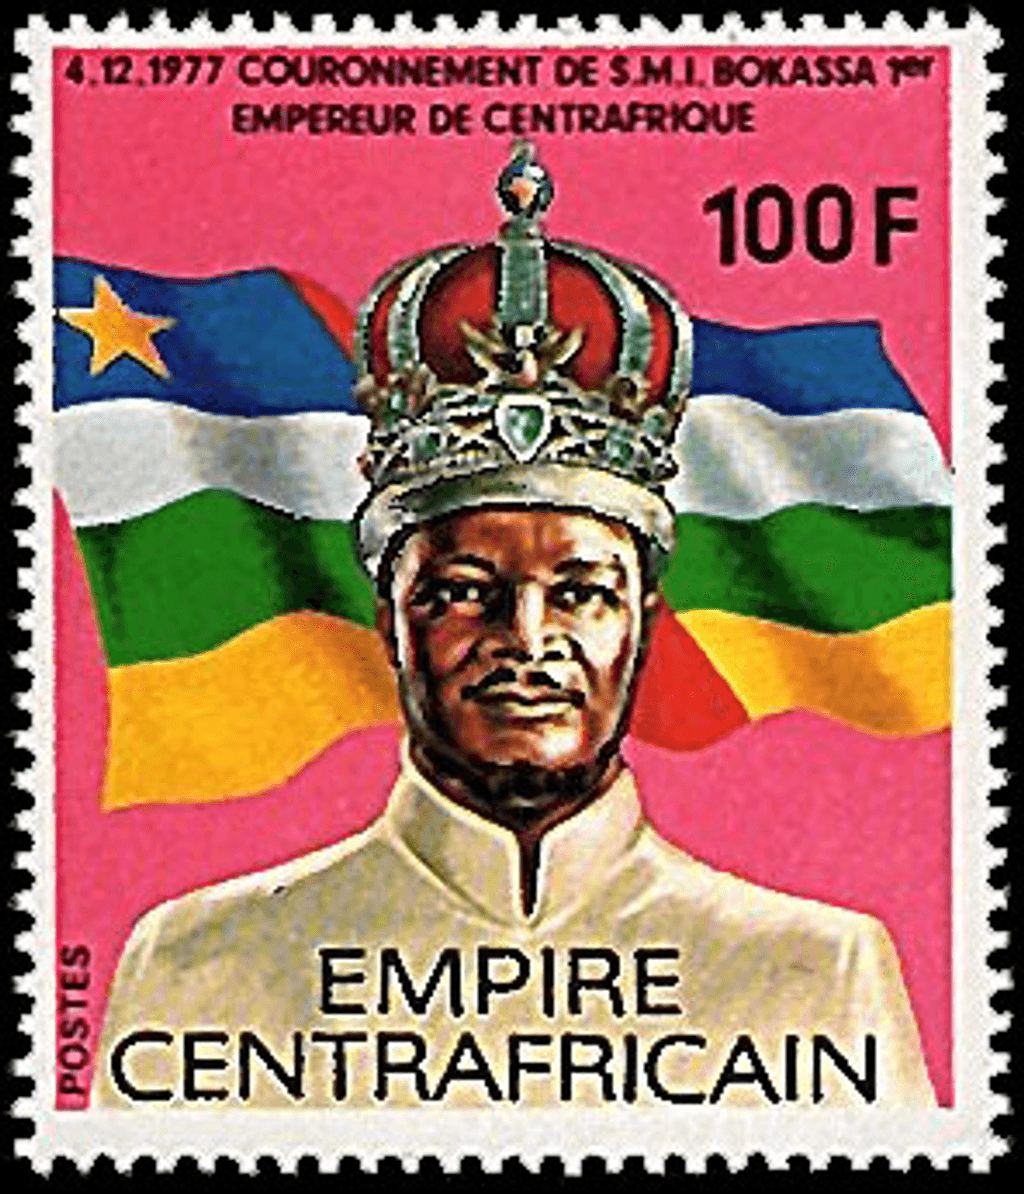 Coronation of jean bedel bokassa as empereur of Central Africa I